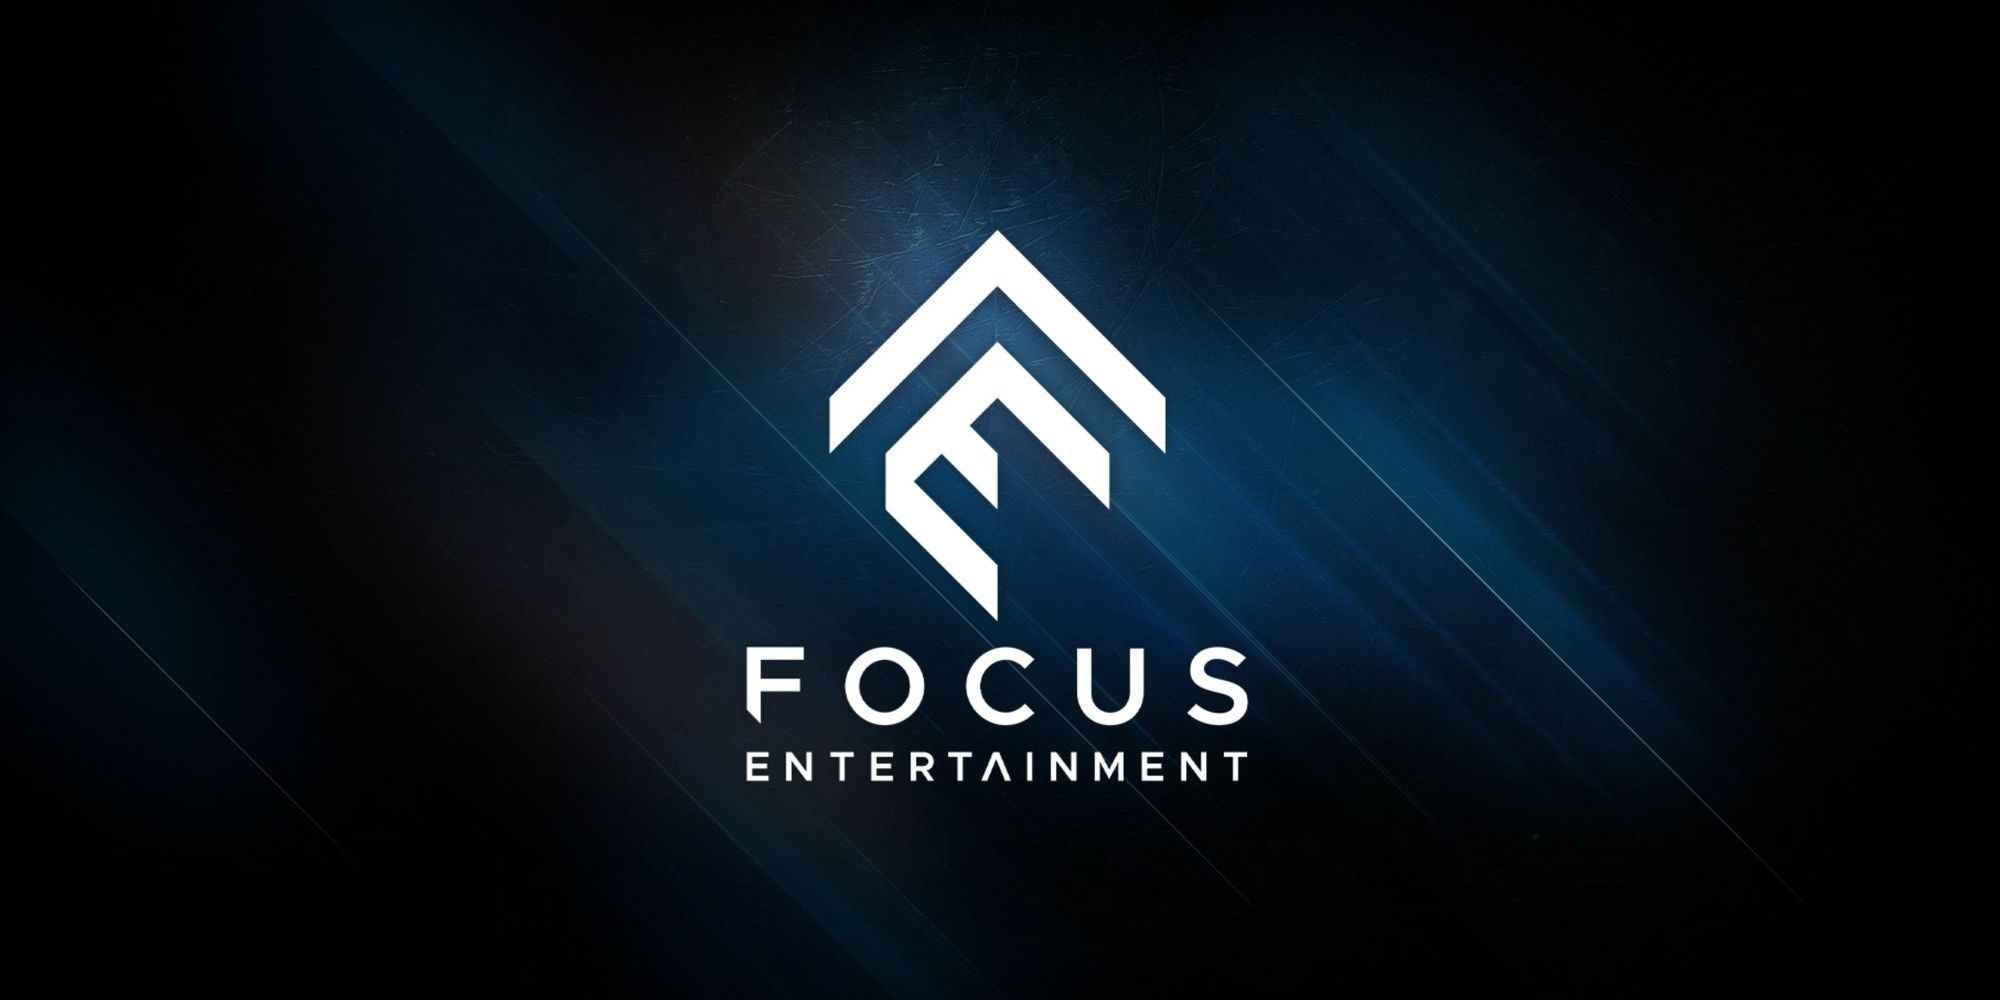 focus-home-interactive-rebrand-9538949